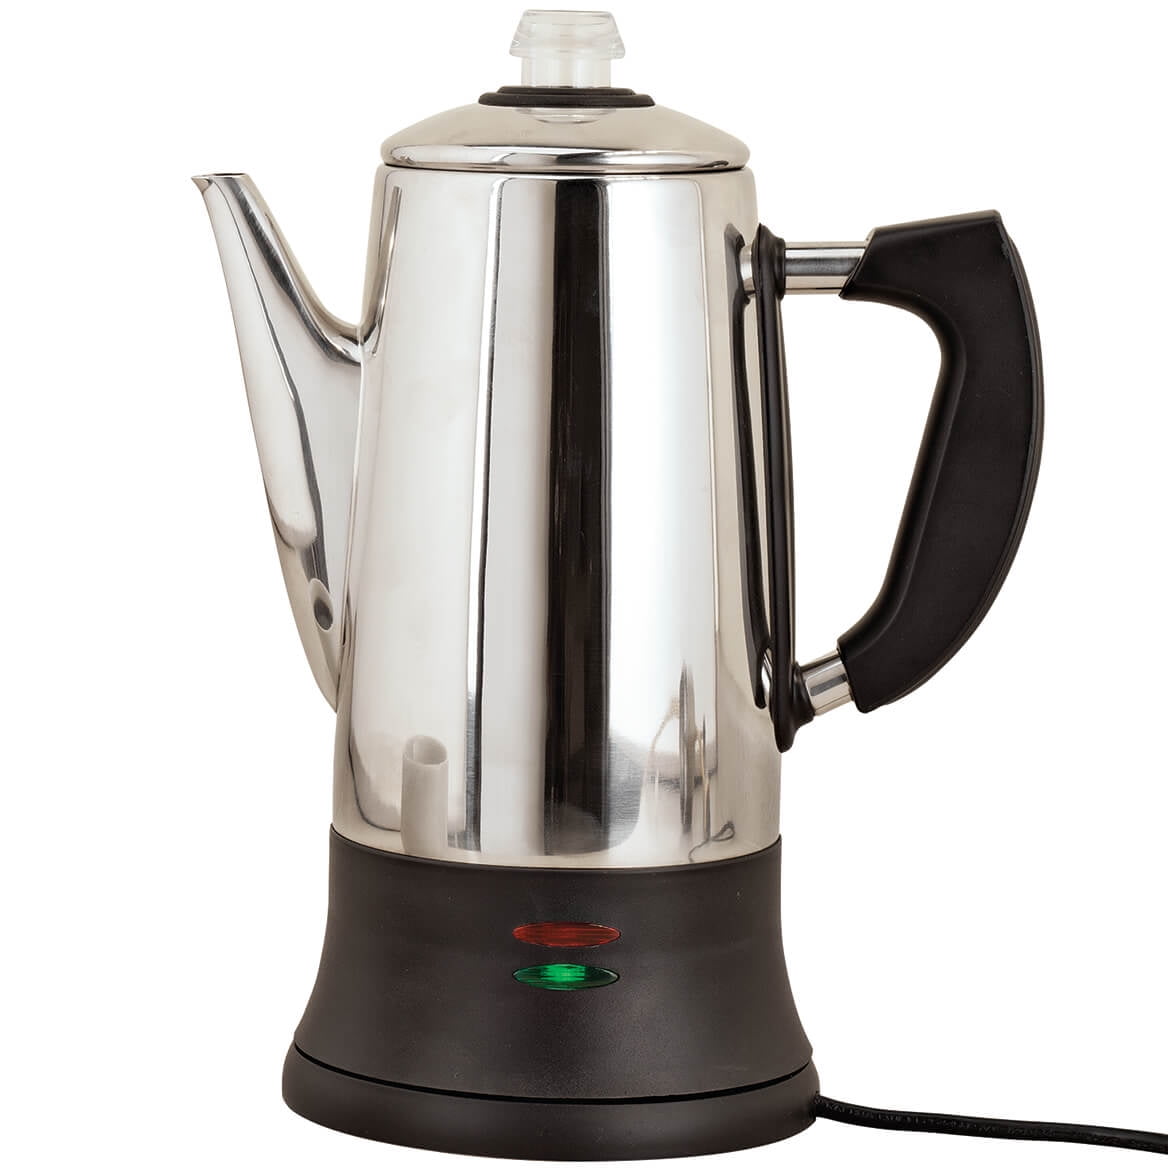  HOMOKUS Electric Coffee Percolator 12 CUPS Percolator